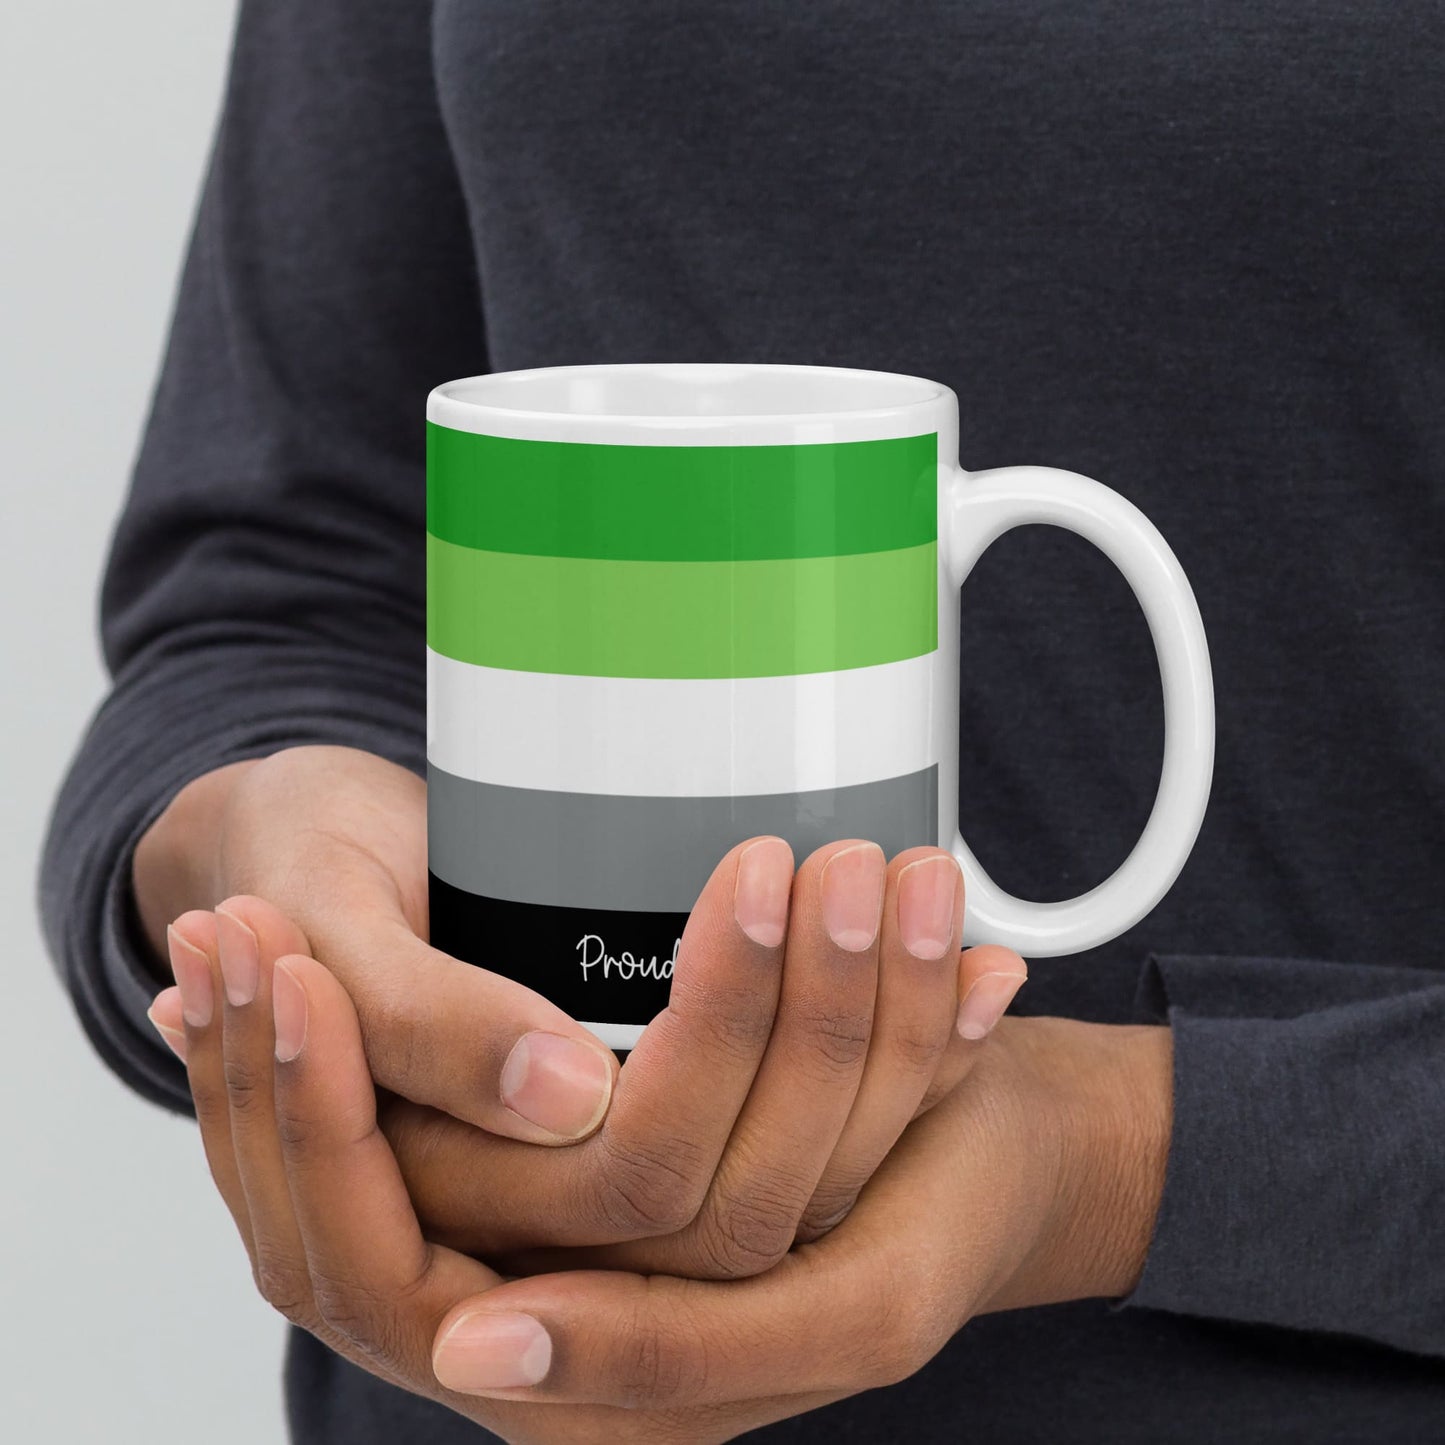 aromantic coffee mug in hands